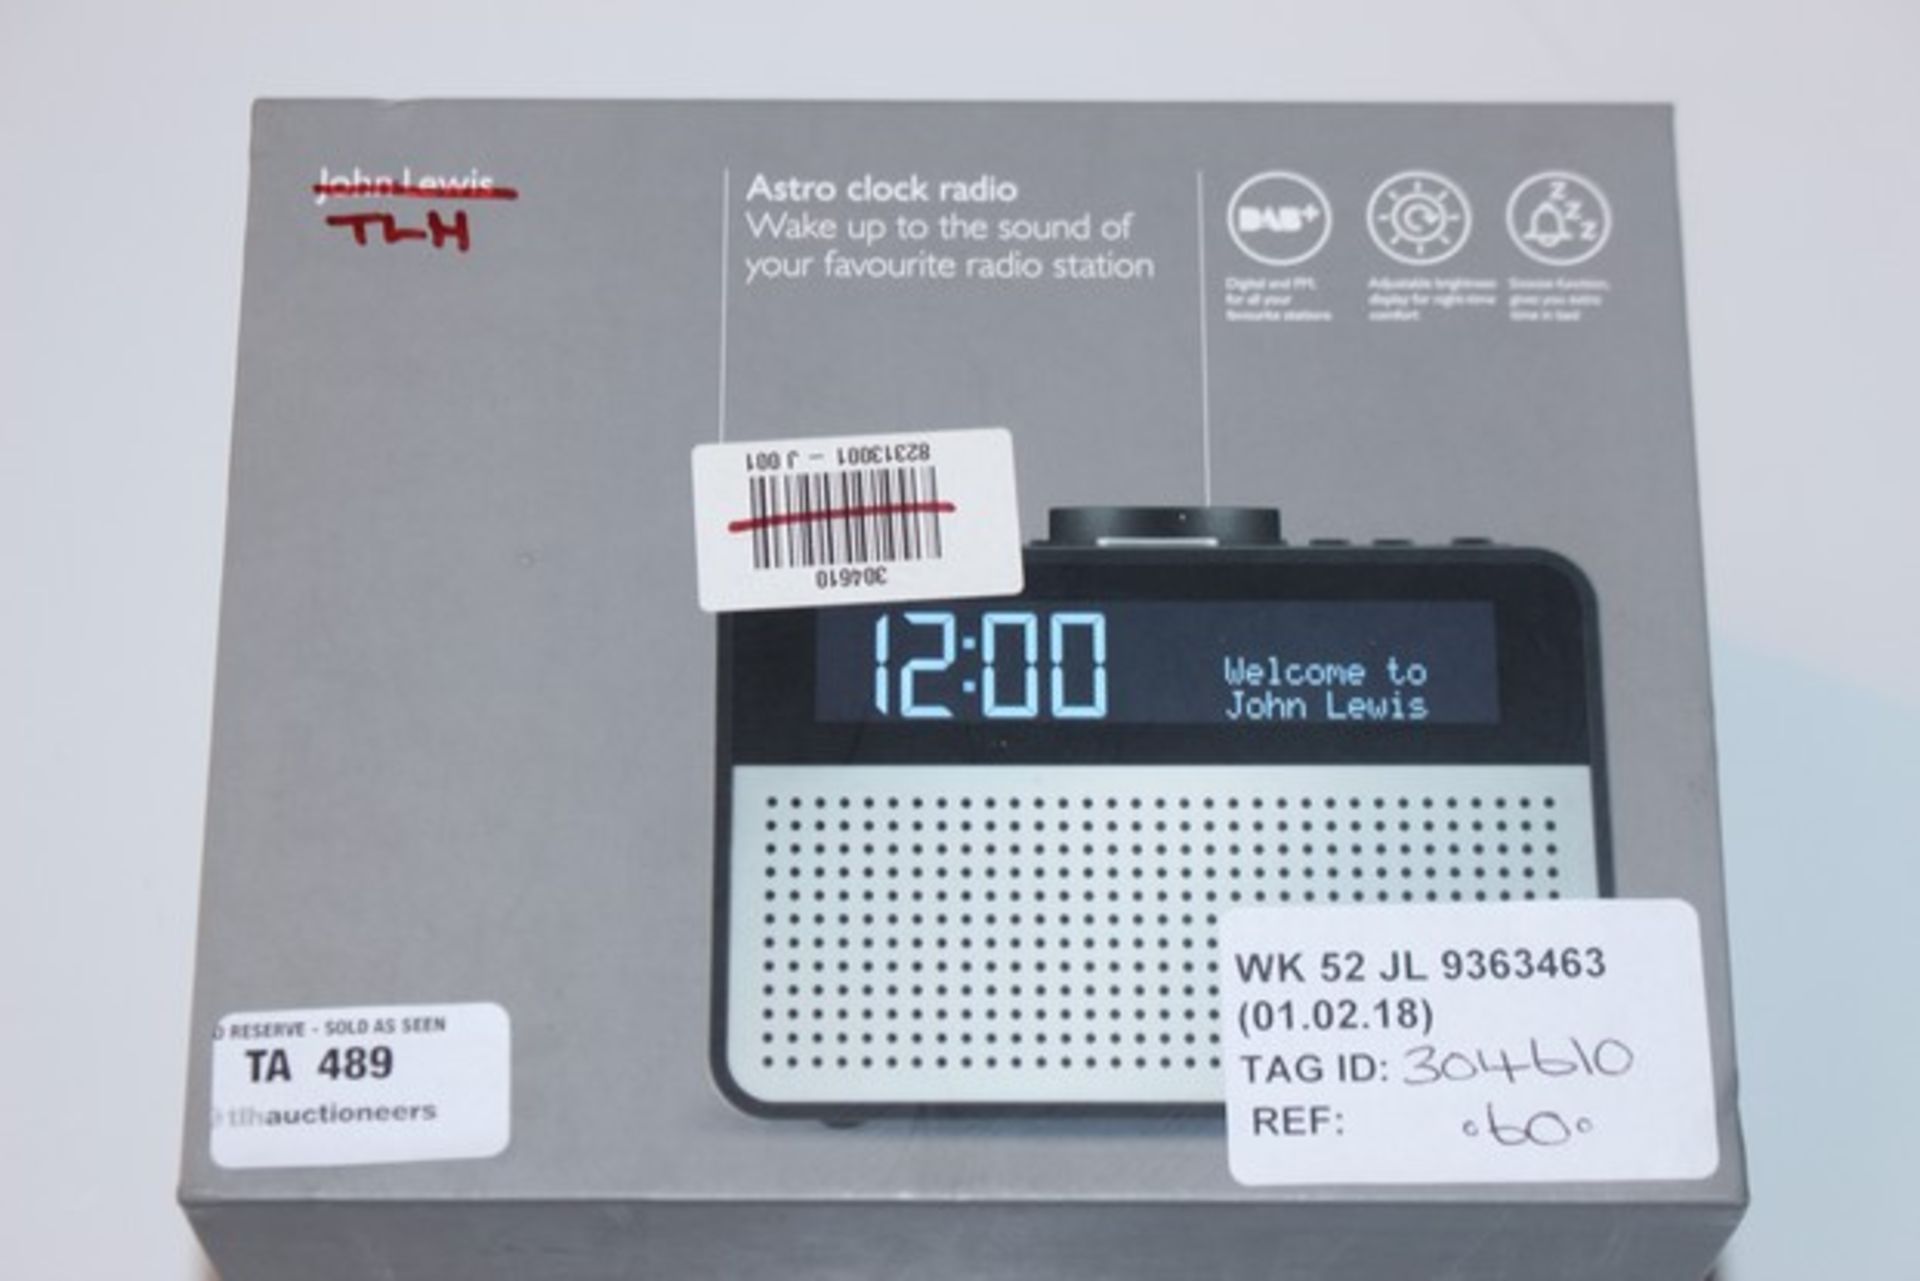 1X ASTRO CLOCK RADIO DIGITAL FM DAB RADIO RRP £60 (01/02/18) (304610)